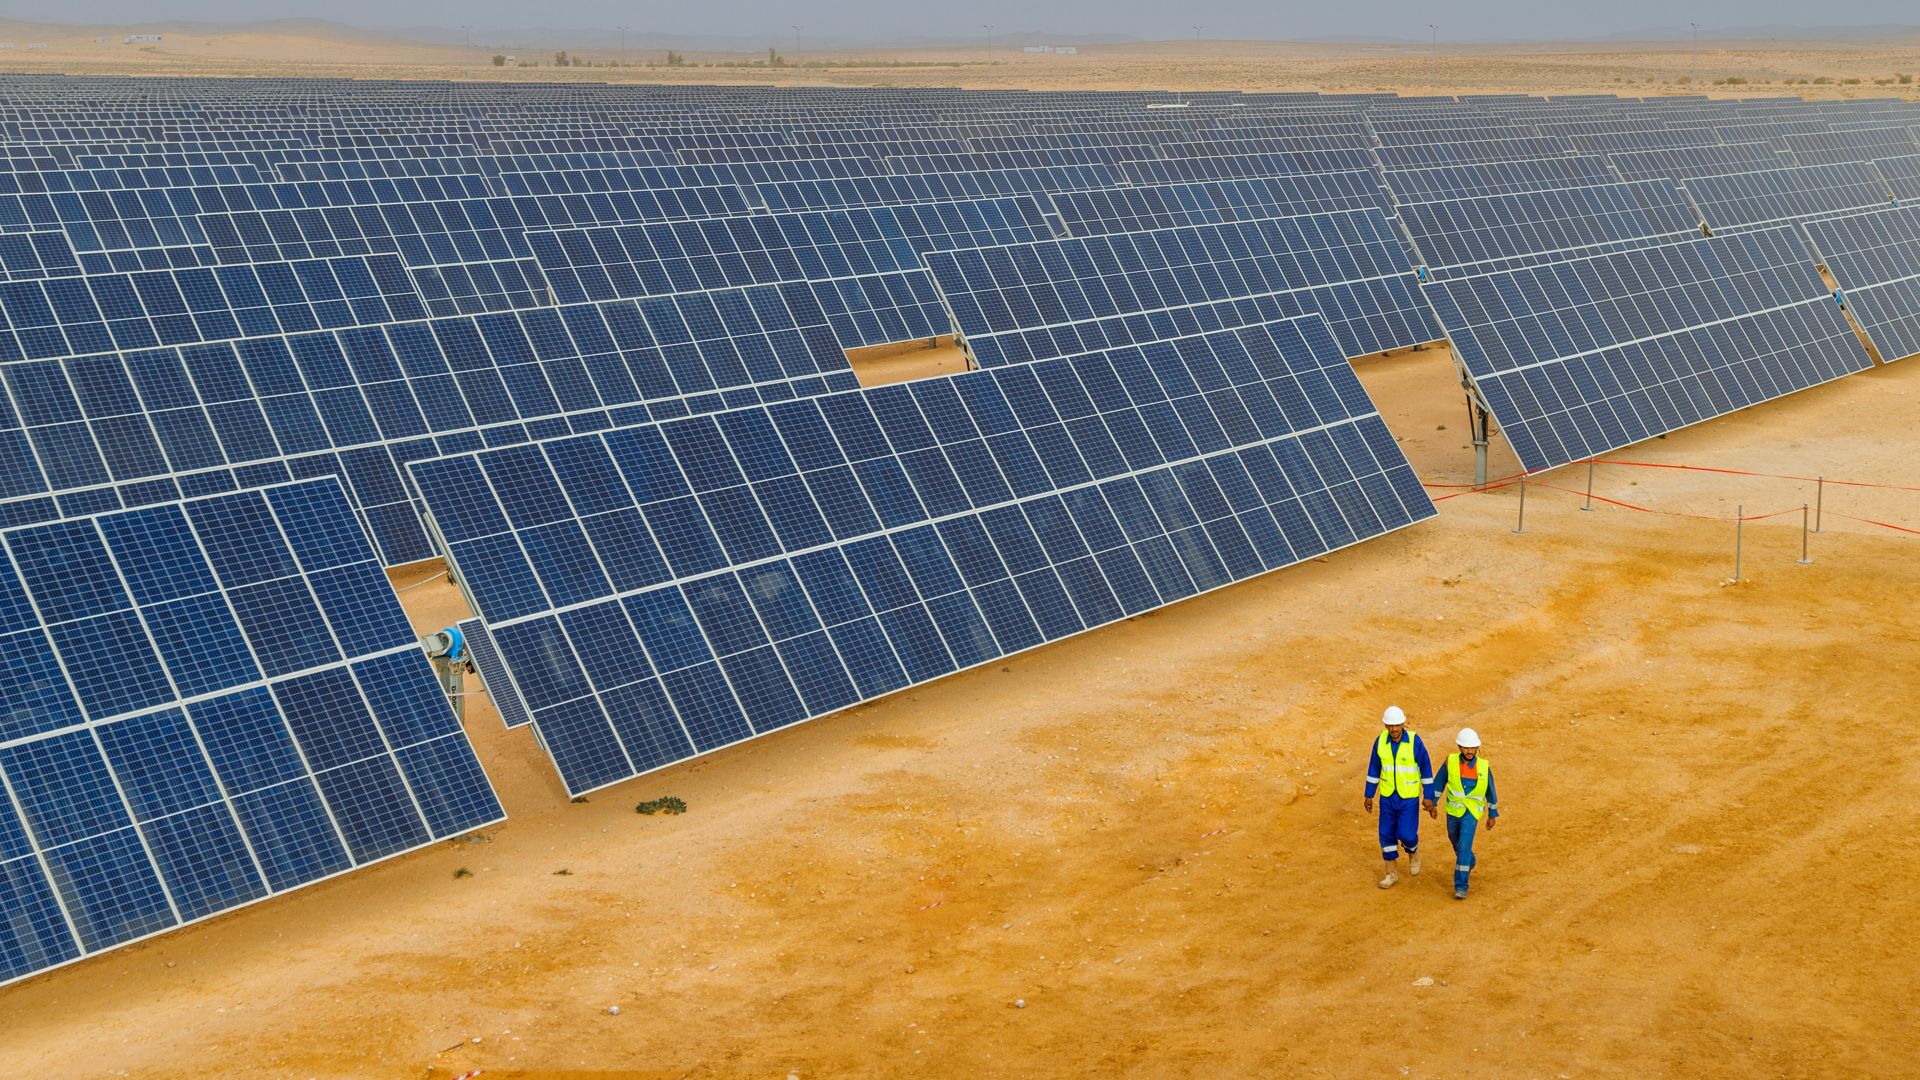 Workers walking in solar panel plant in Tunisian desert